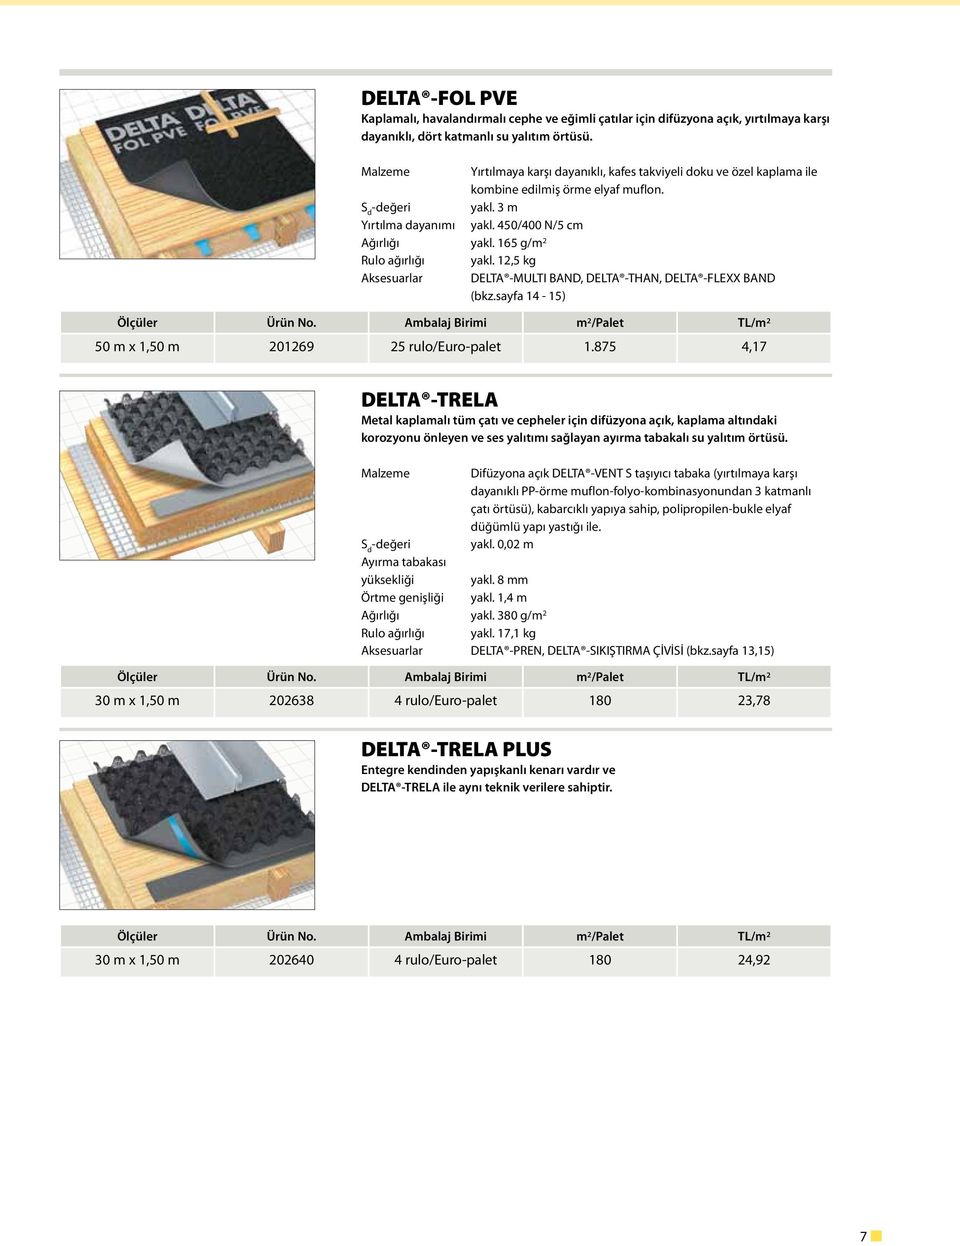 165 g/m 2 Rulo ağırlığı yakl. 12,5 kg Aksesuarlar DELTA -MULTI BAND, DELTA -THAN, DELTA -FLEXX BAND (bkz.sayfa 14-15) 50 m x 1,50 m 201269 25 rulo/euro-palet 1.